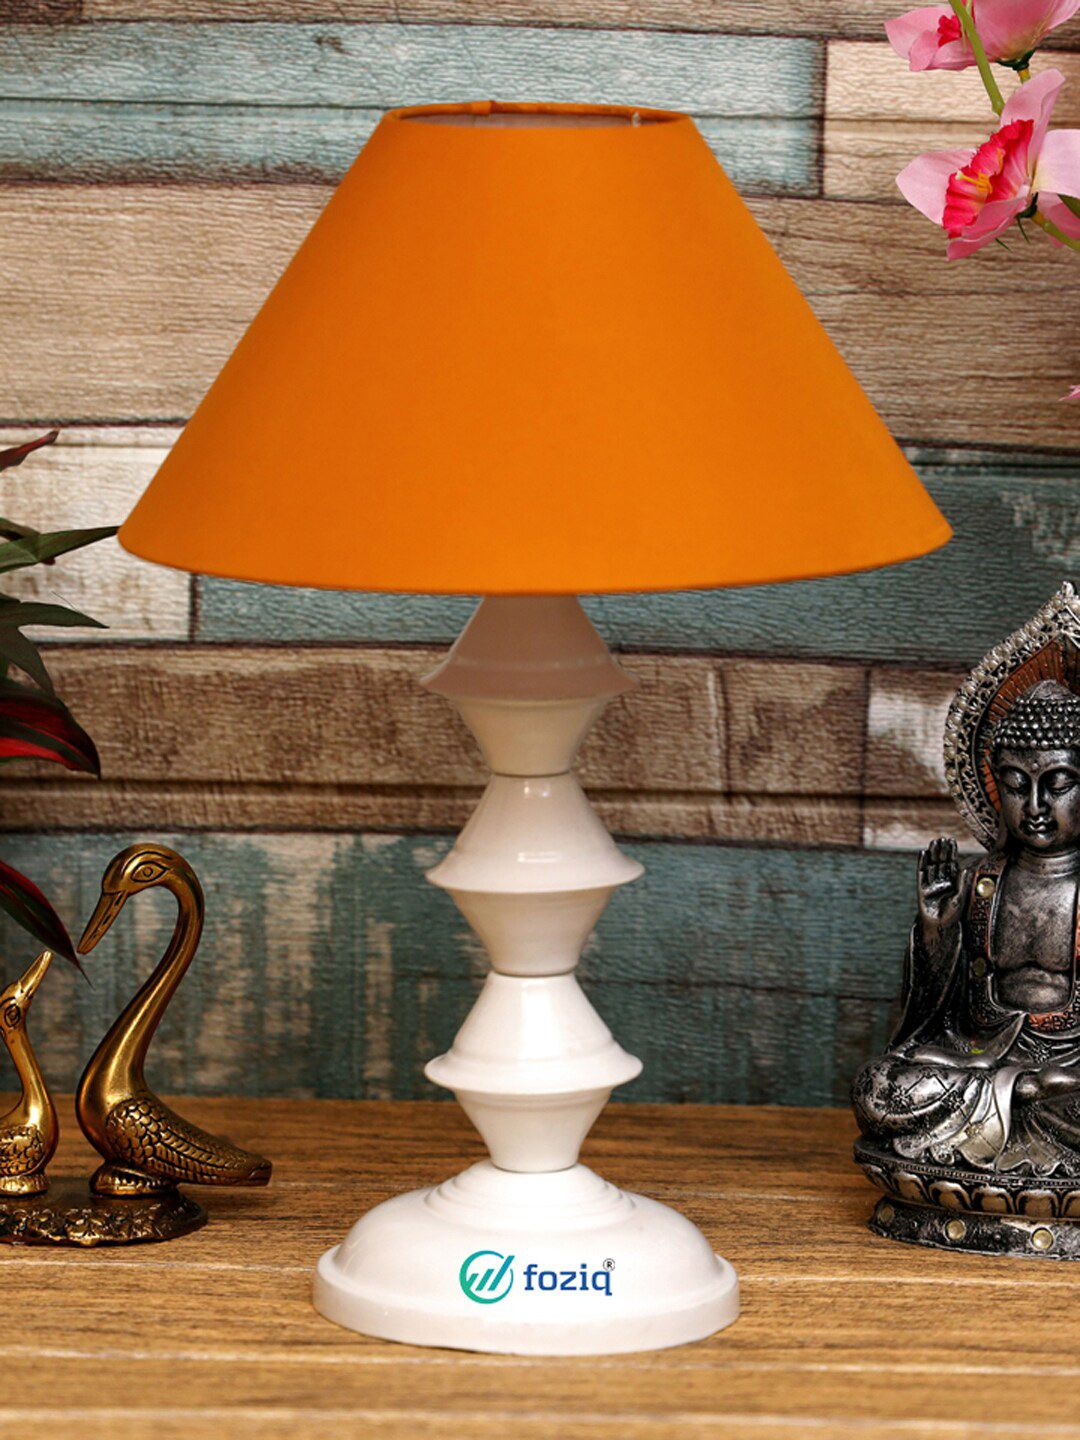 foziq White and Orange solid Table Lamp Price in India